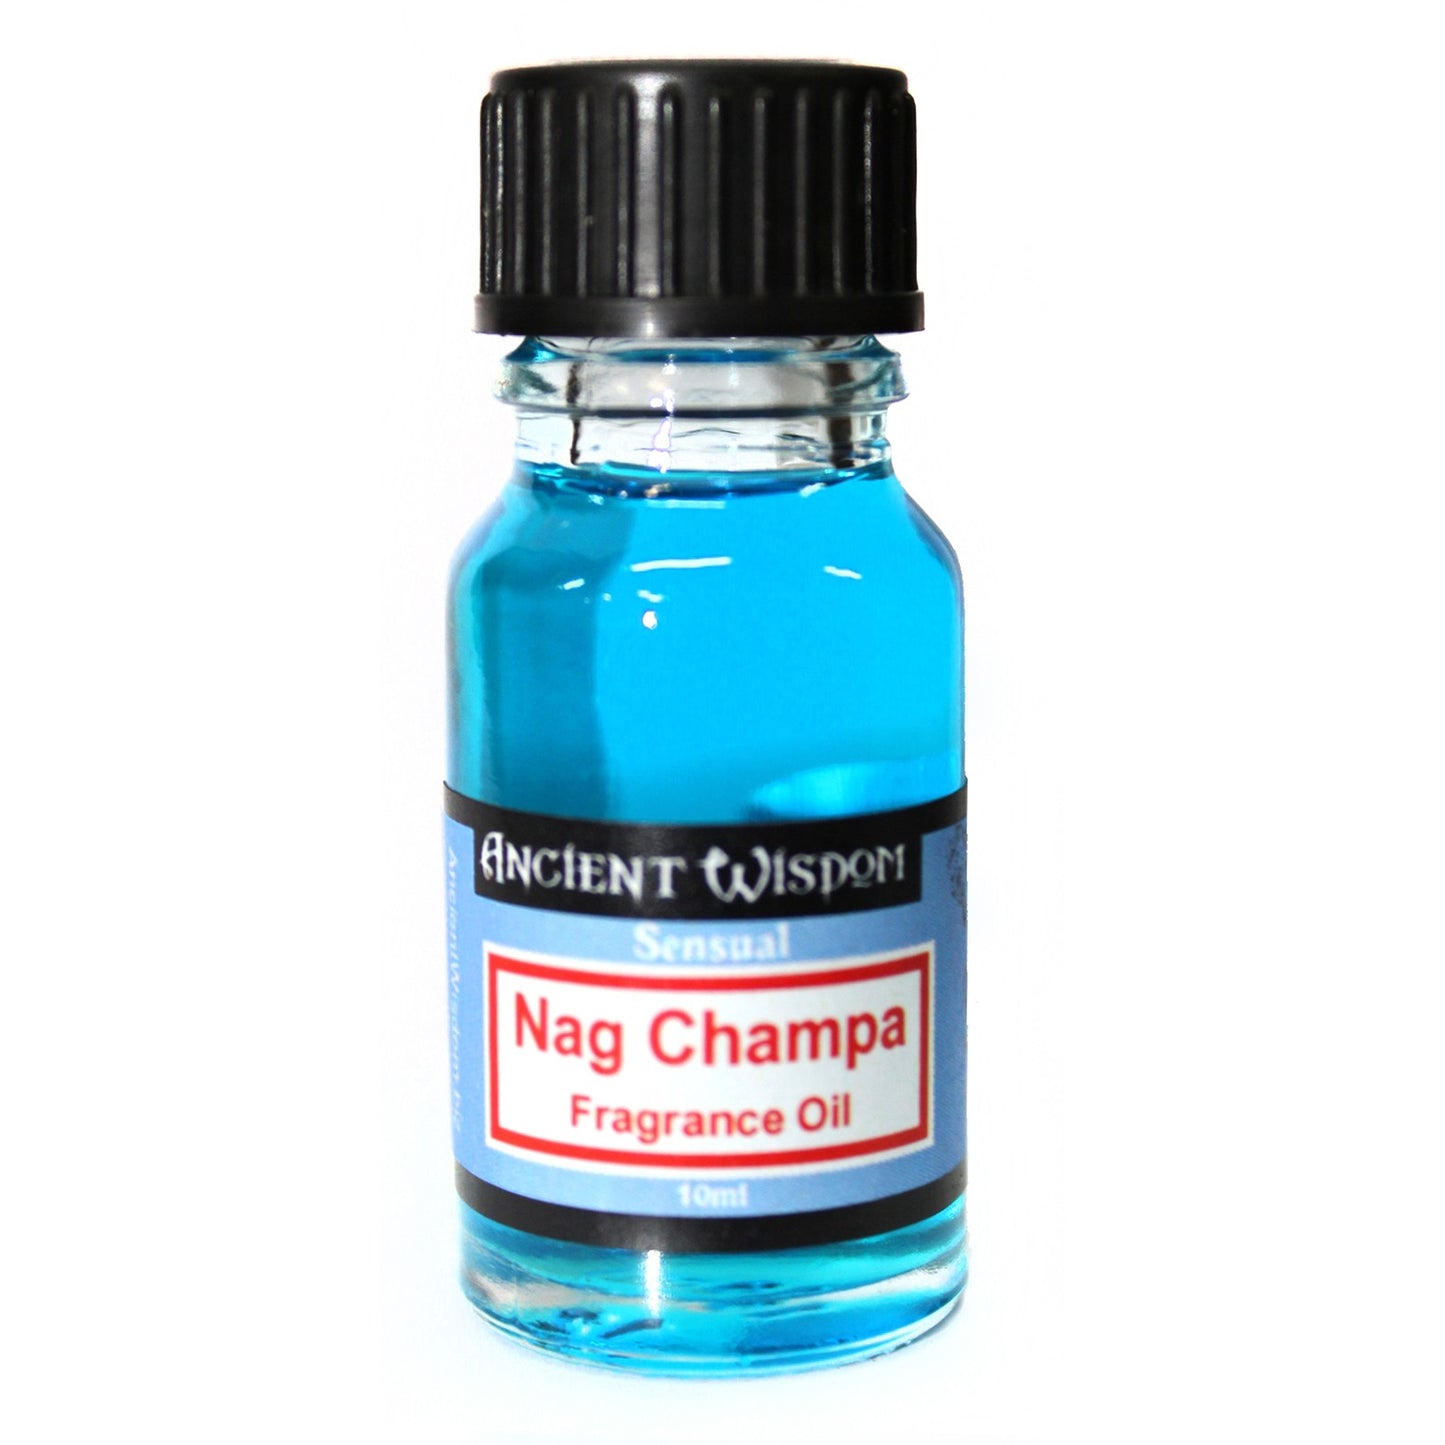 10ml Nag Champa Fragrance Oil